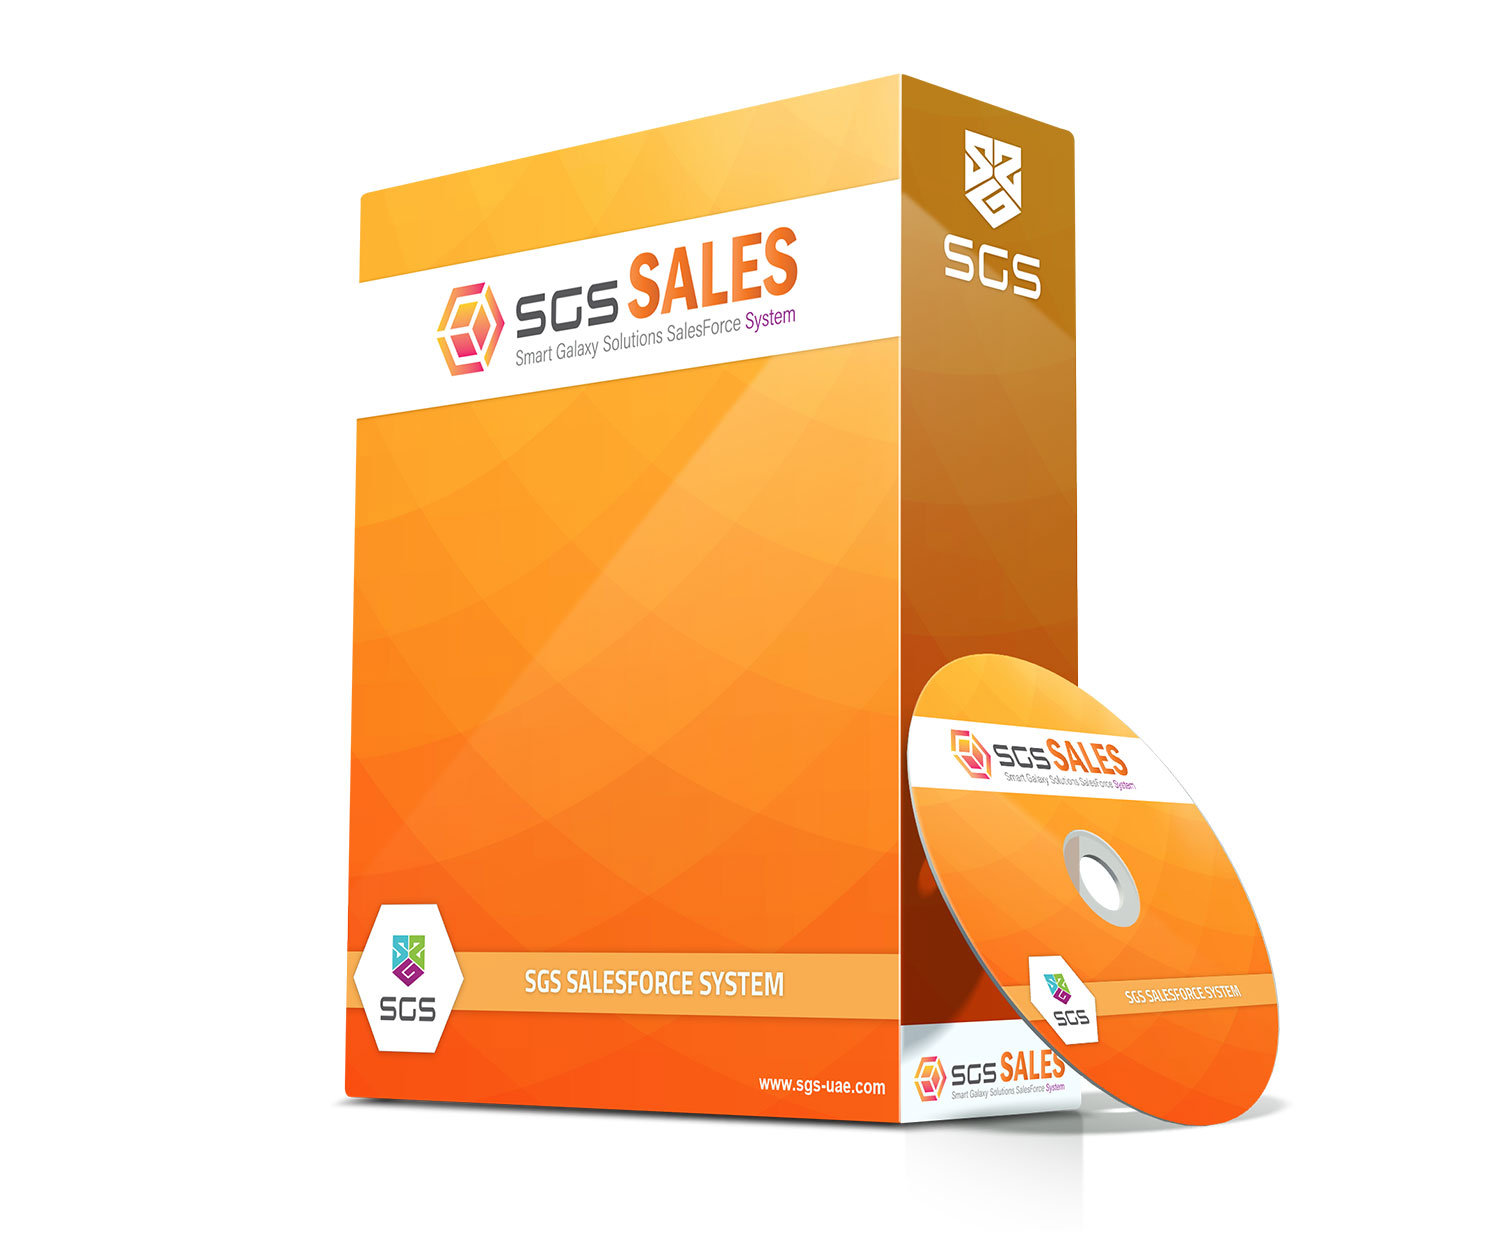 SGS Smart Galaxy Solutions Software company UAE